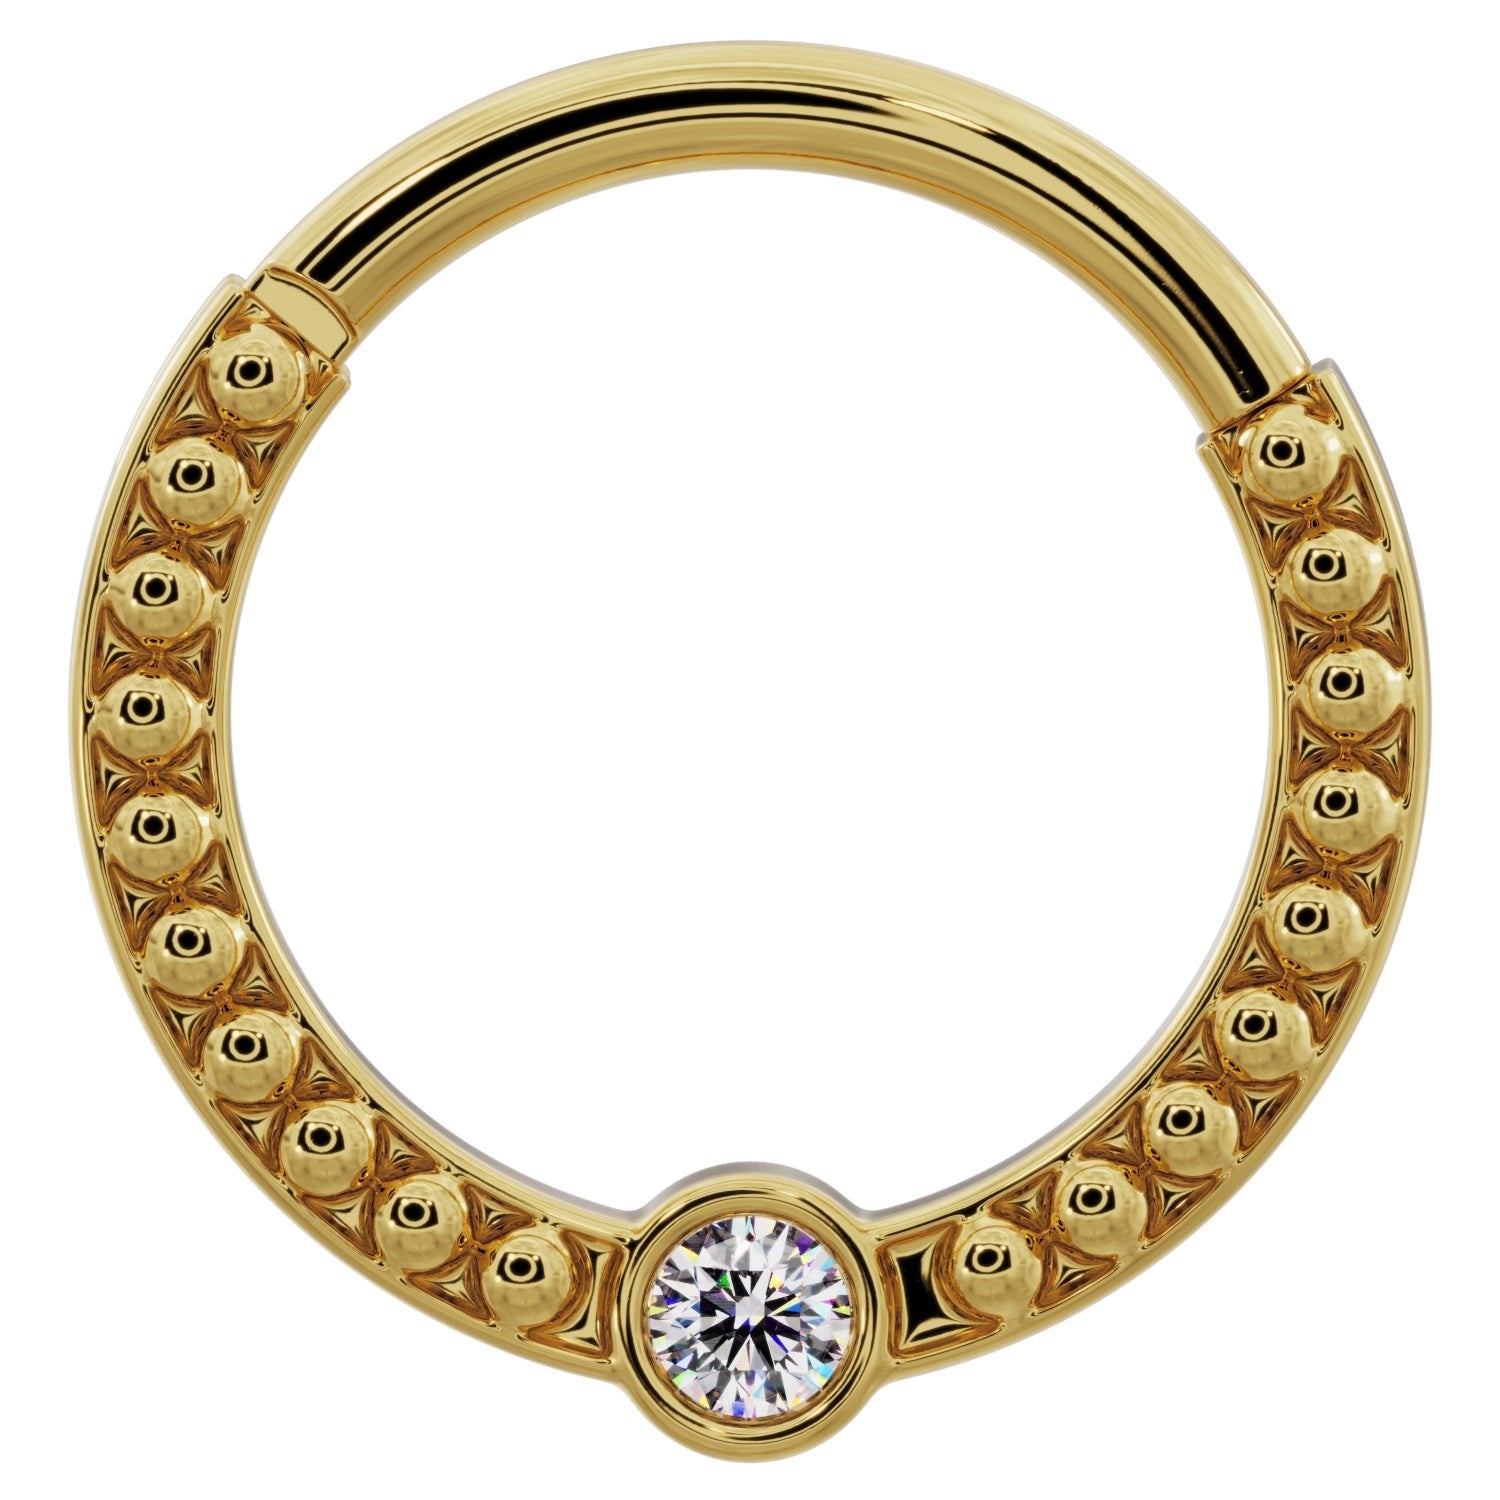 Diamond Bezel Channel-Set Dome Beads 14k Gold Clicker Ring-14K Yellow Gold   14G (1.6mm)   5 8